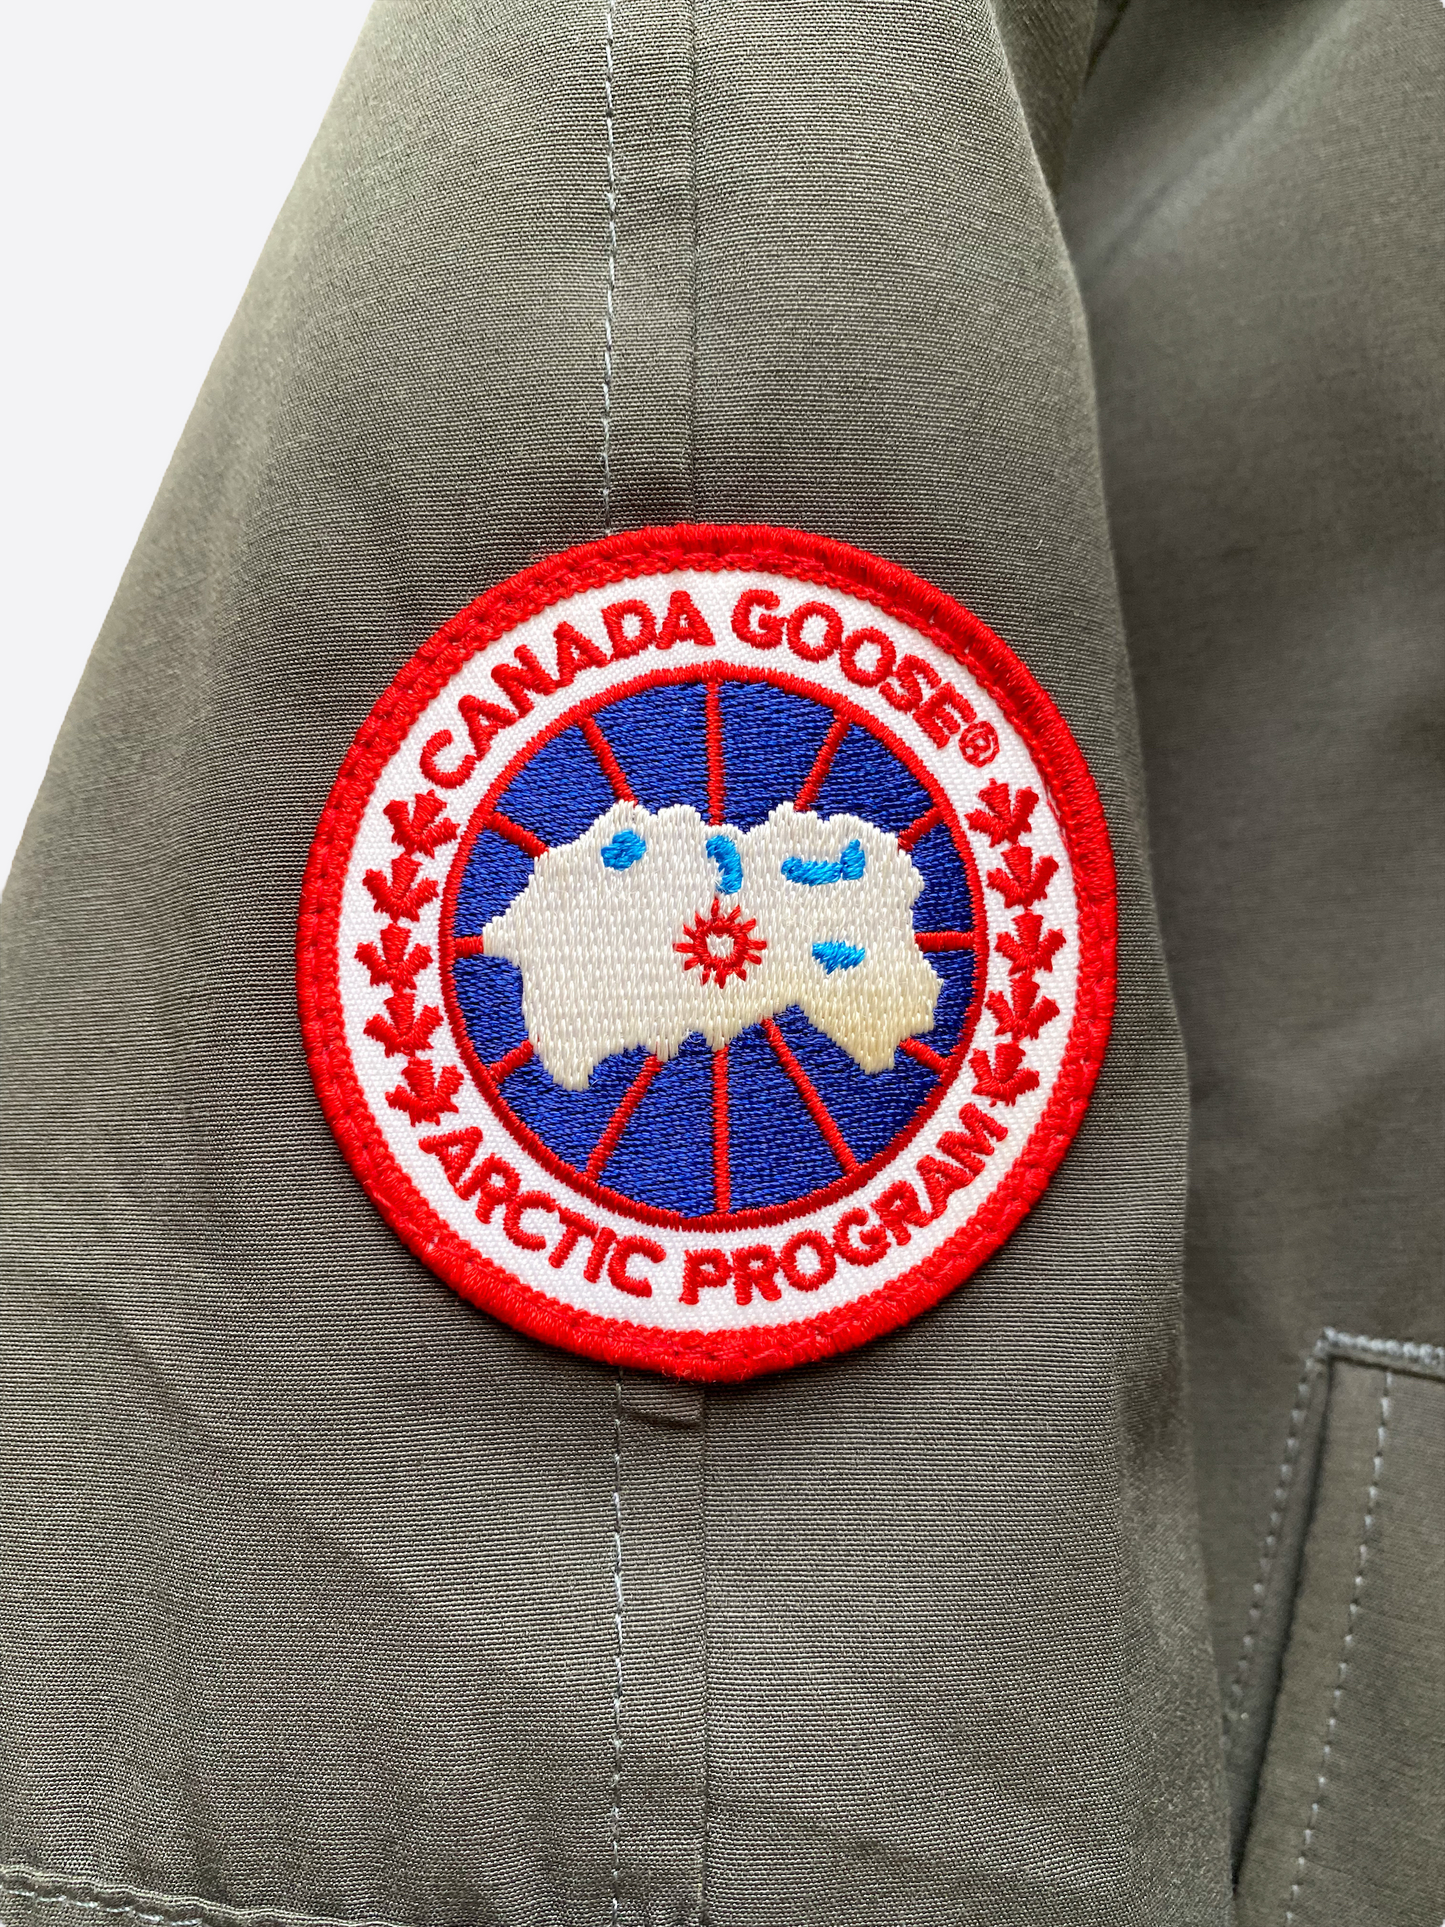 Canada Goose Graphite Chilliwack Men's Jacket